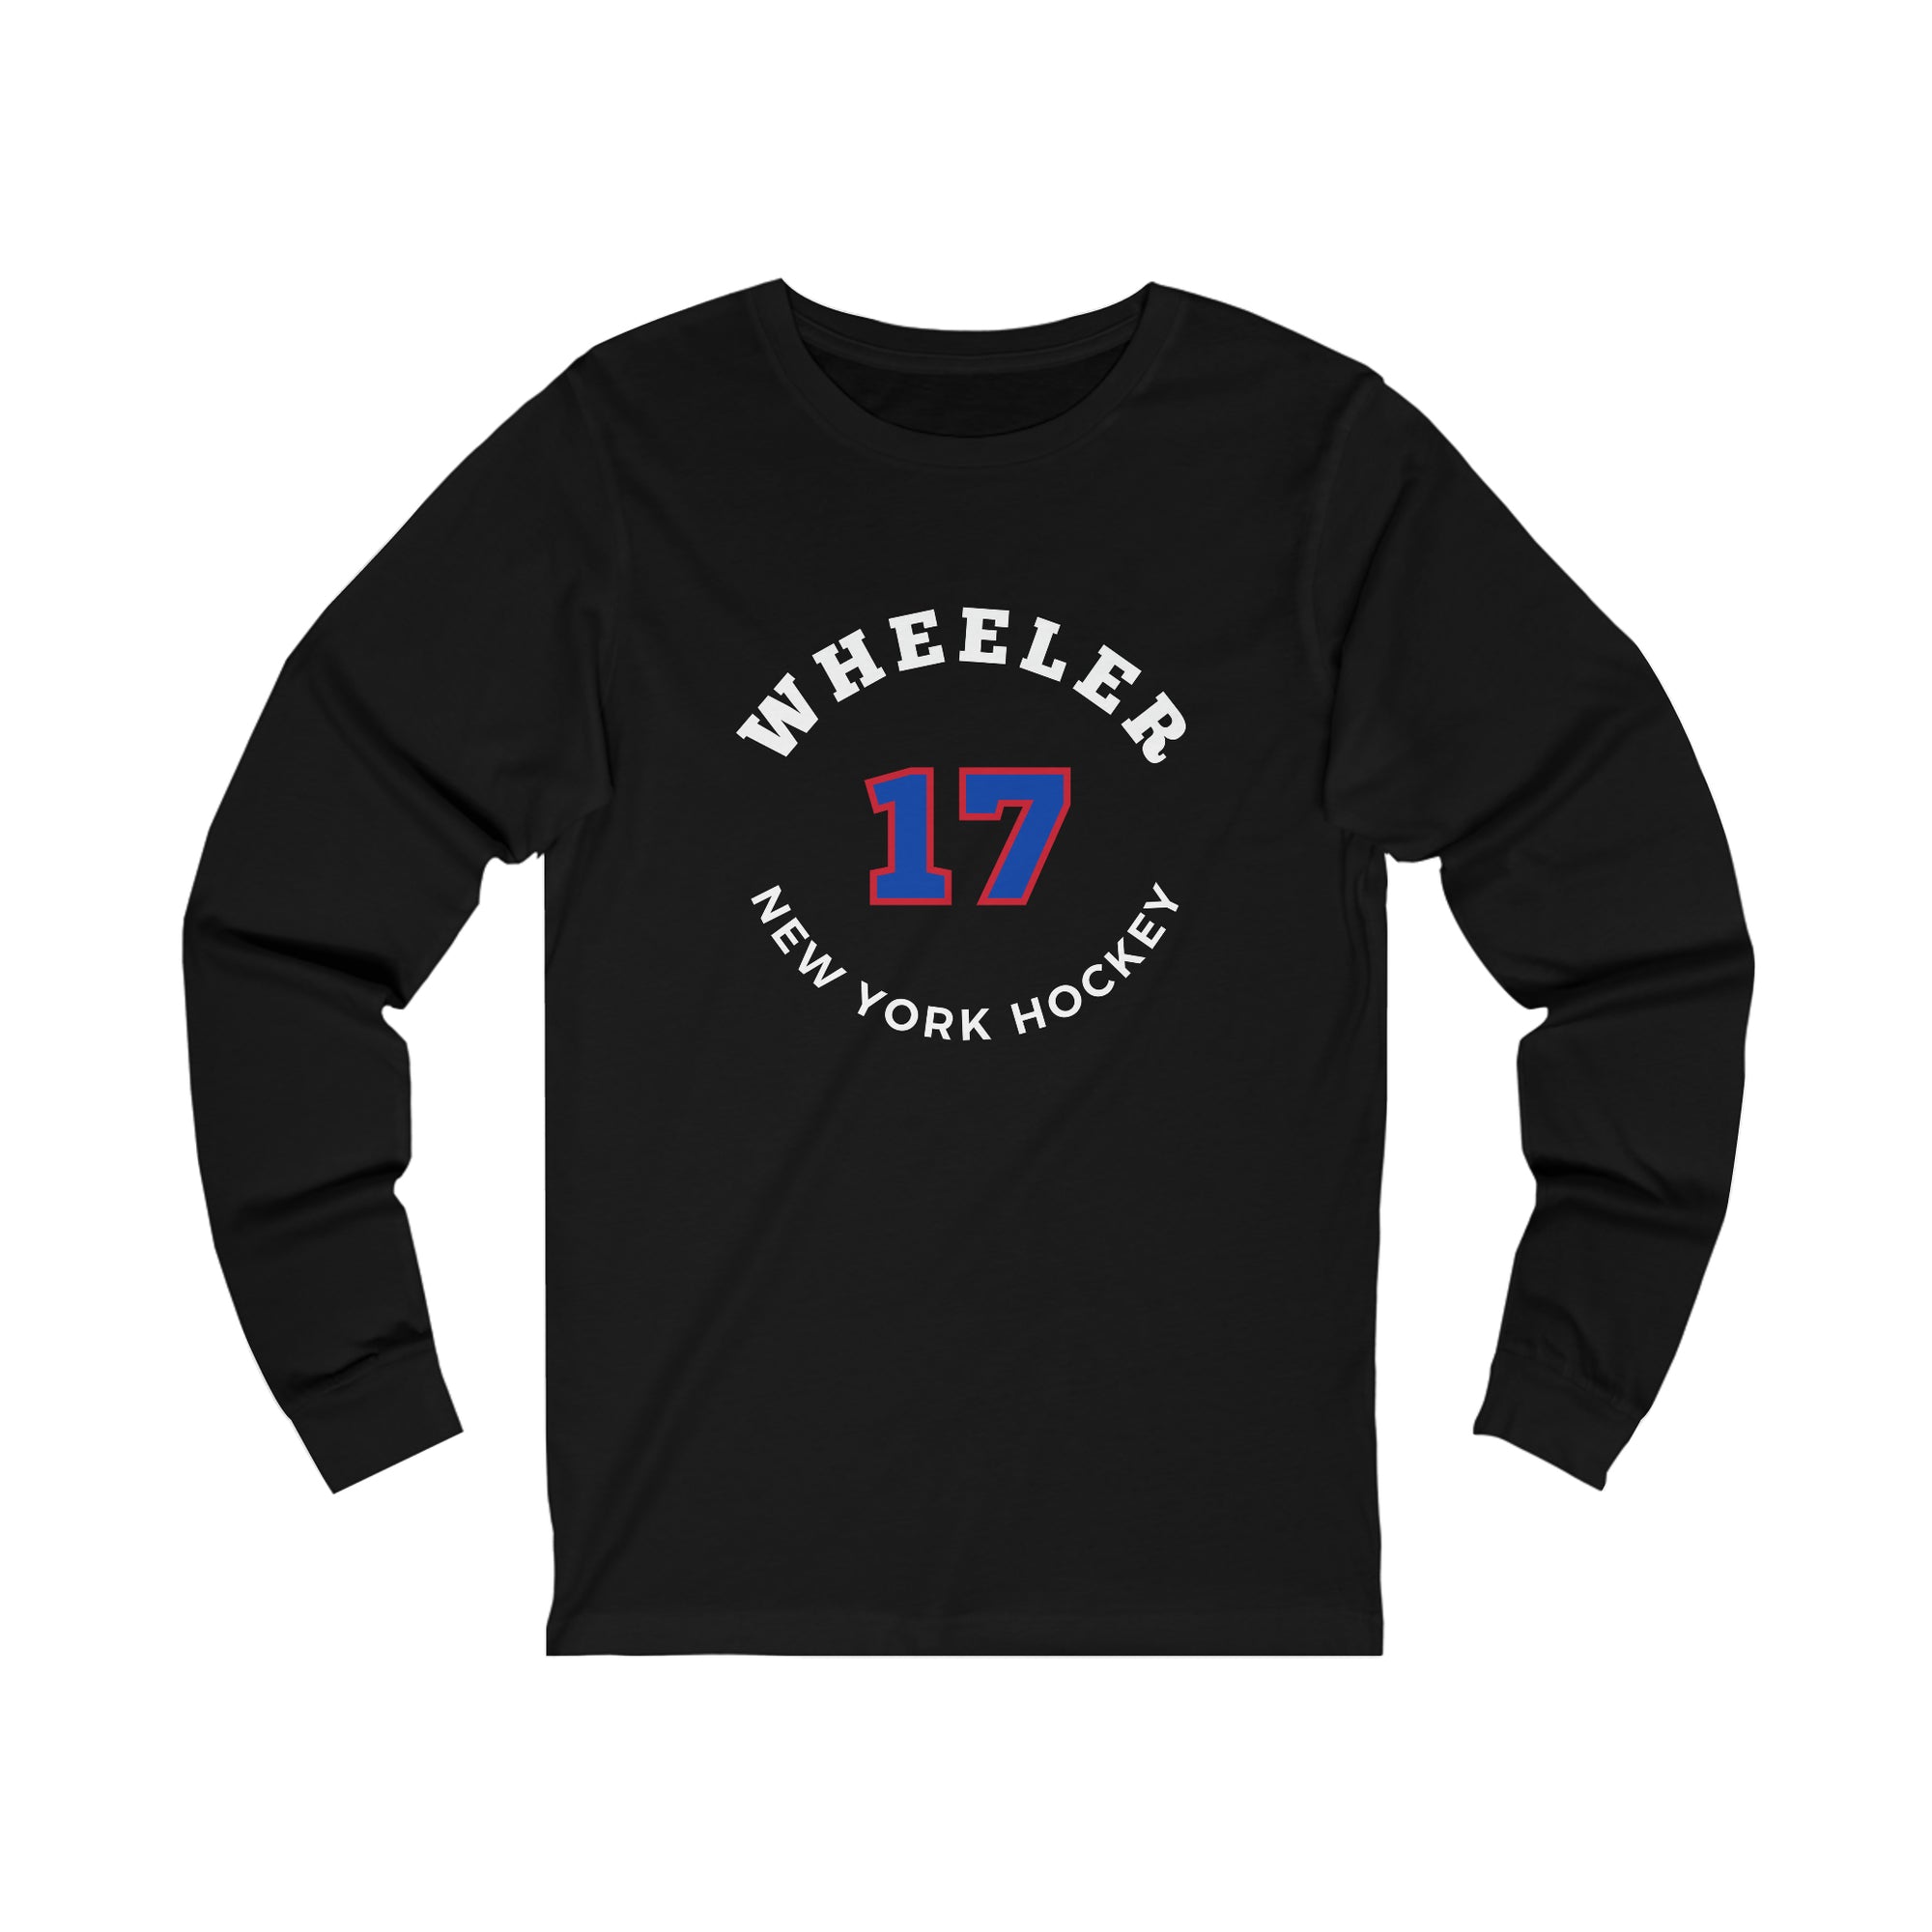 Wheeler 17 New York Hockey Number Arch Design Unisex Jersey Long Sleeve Shirt